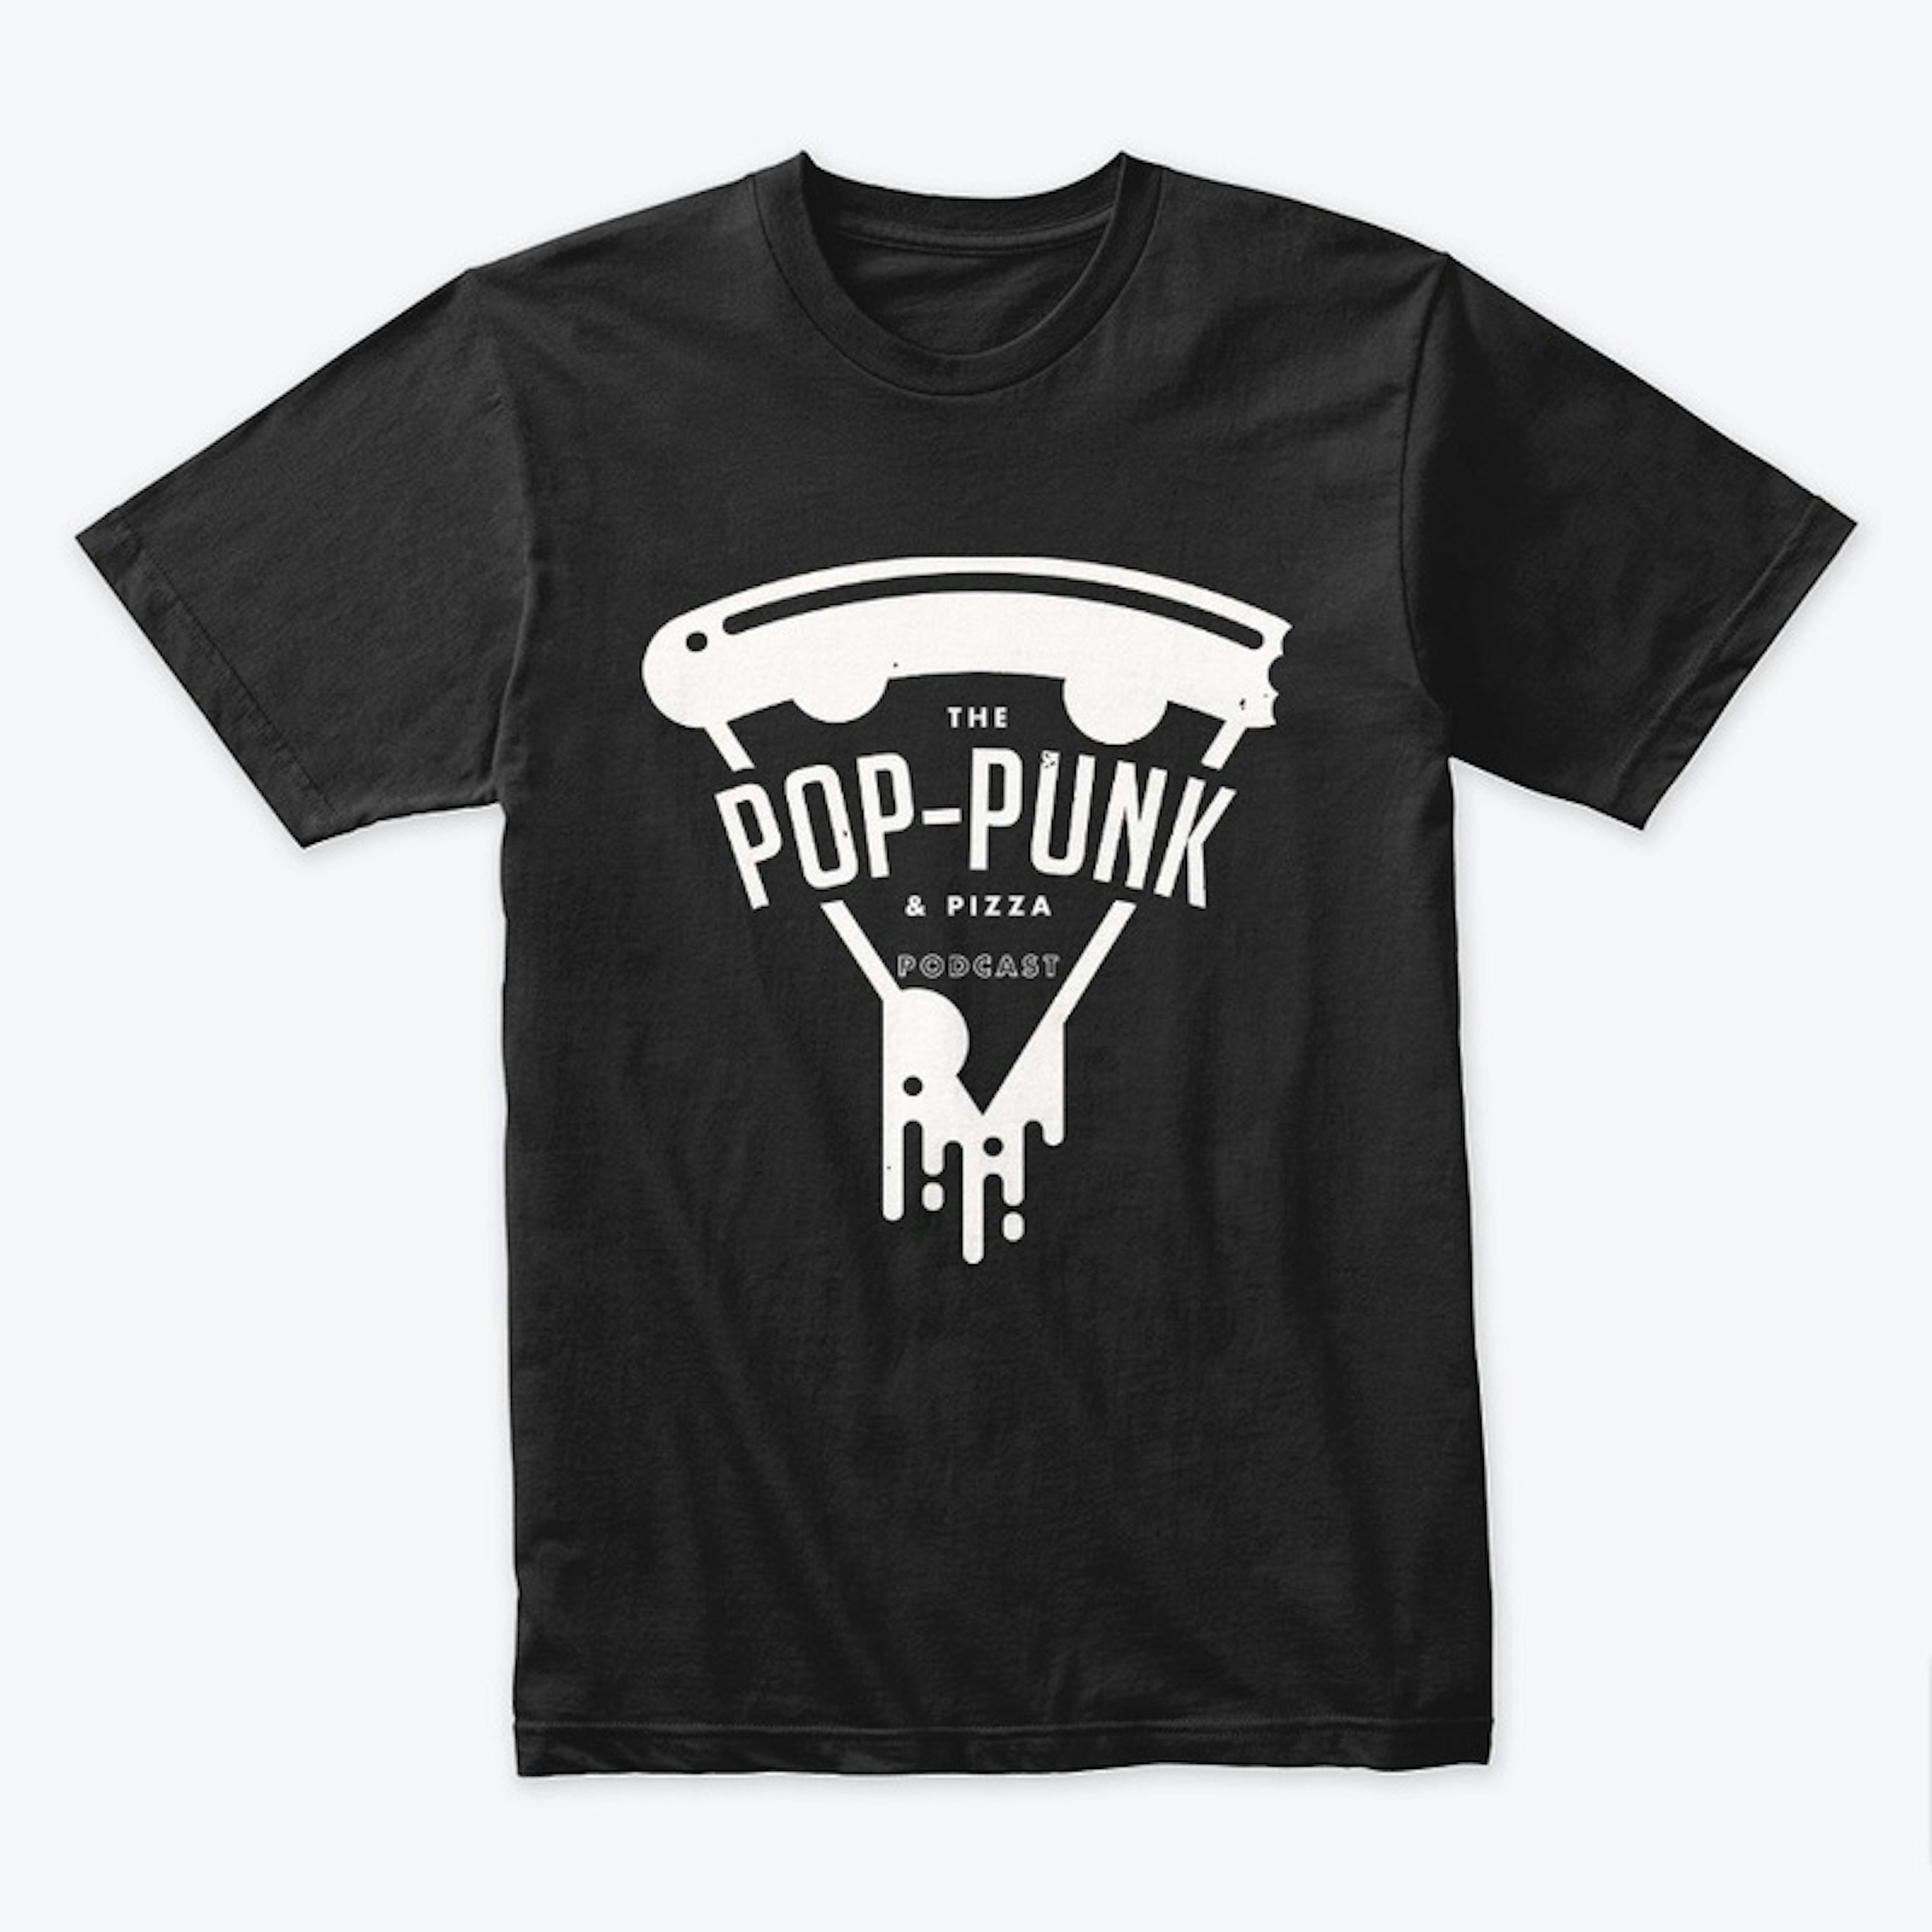 Pop-Punk &amp; Pizza Podcast Logo